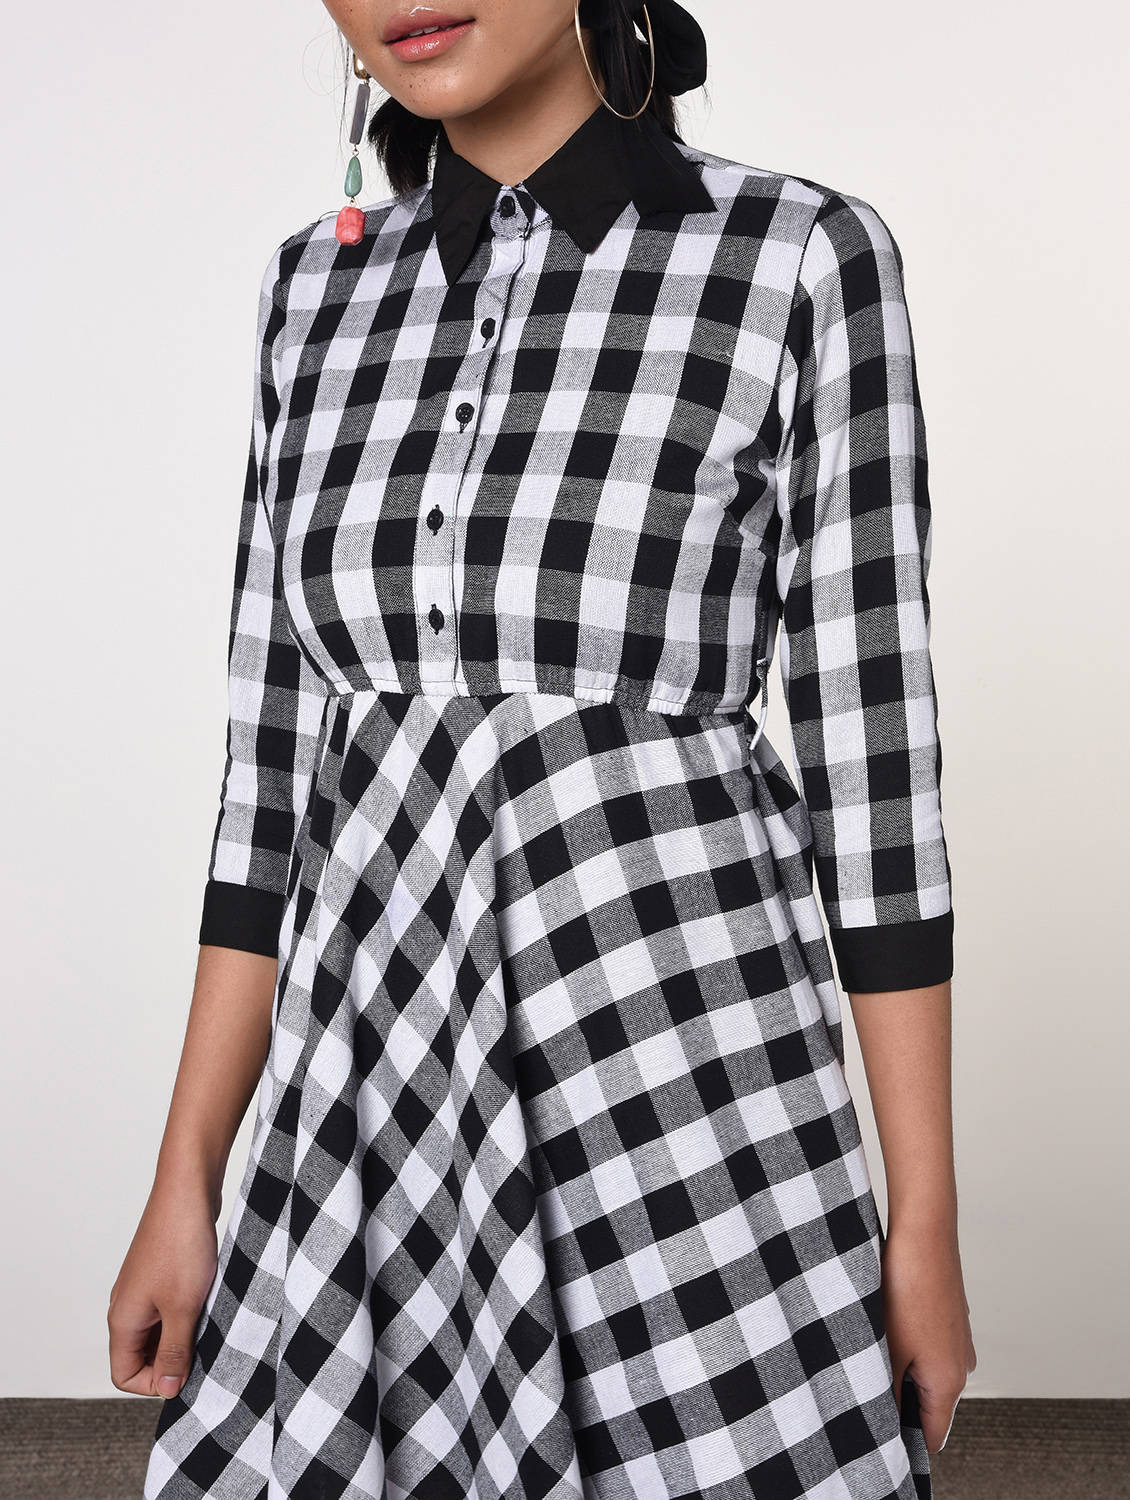 Gingham checkered flared dress